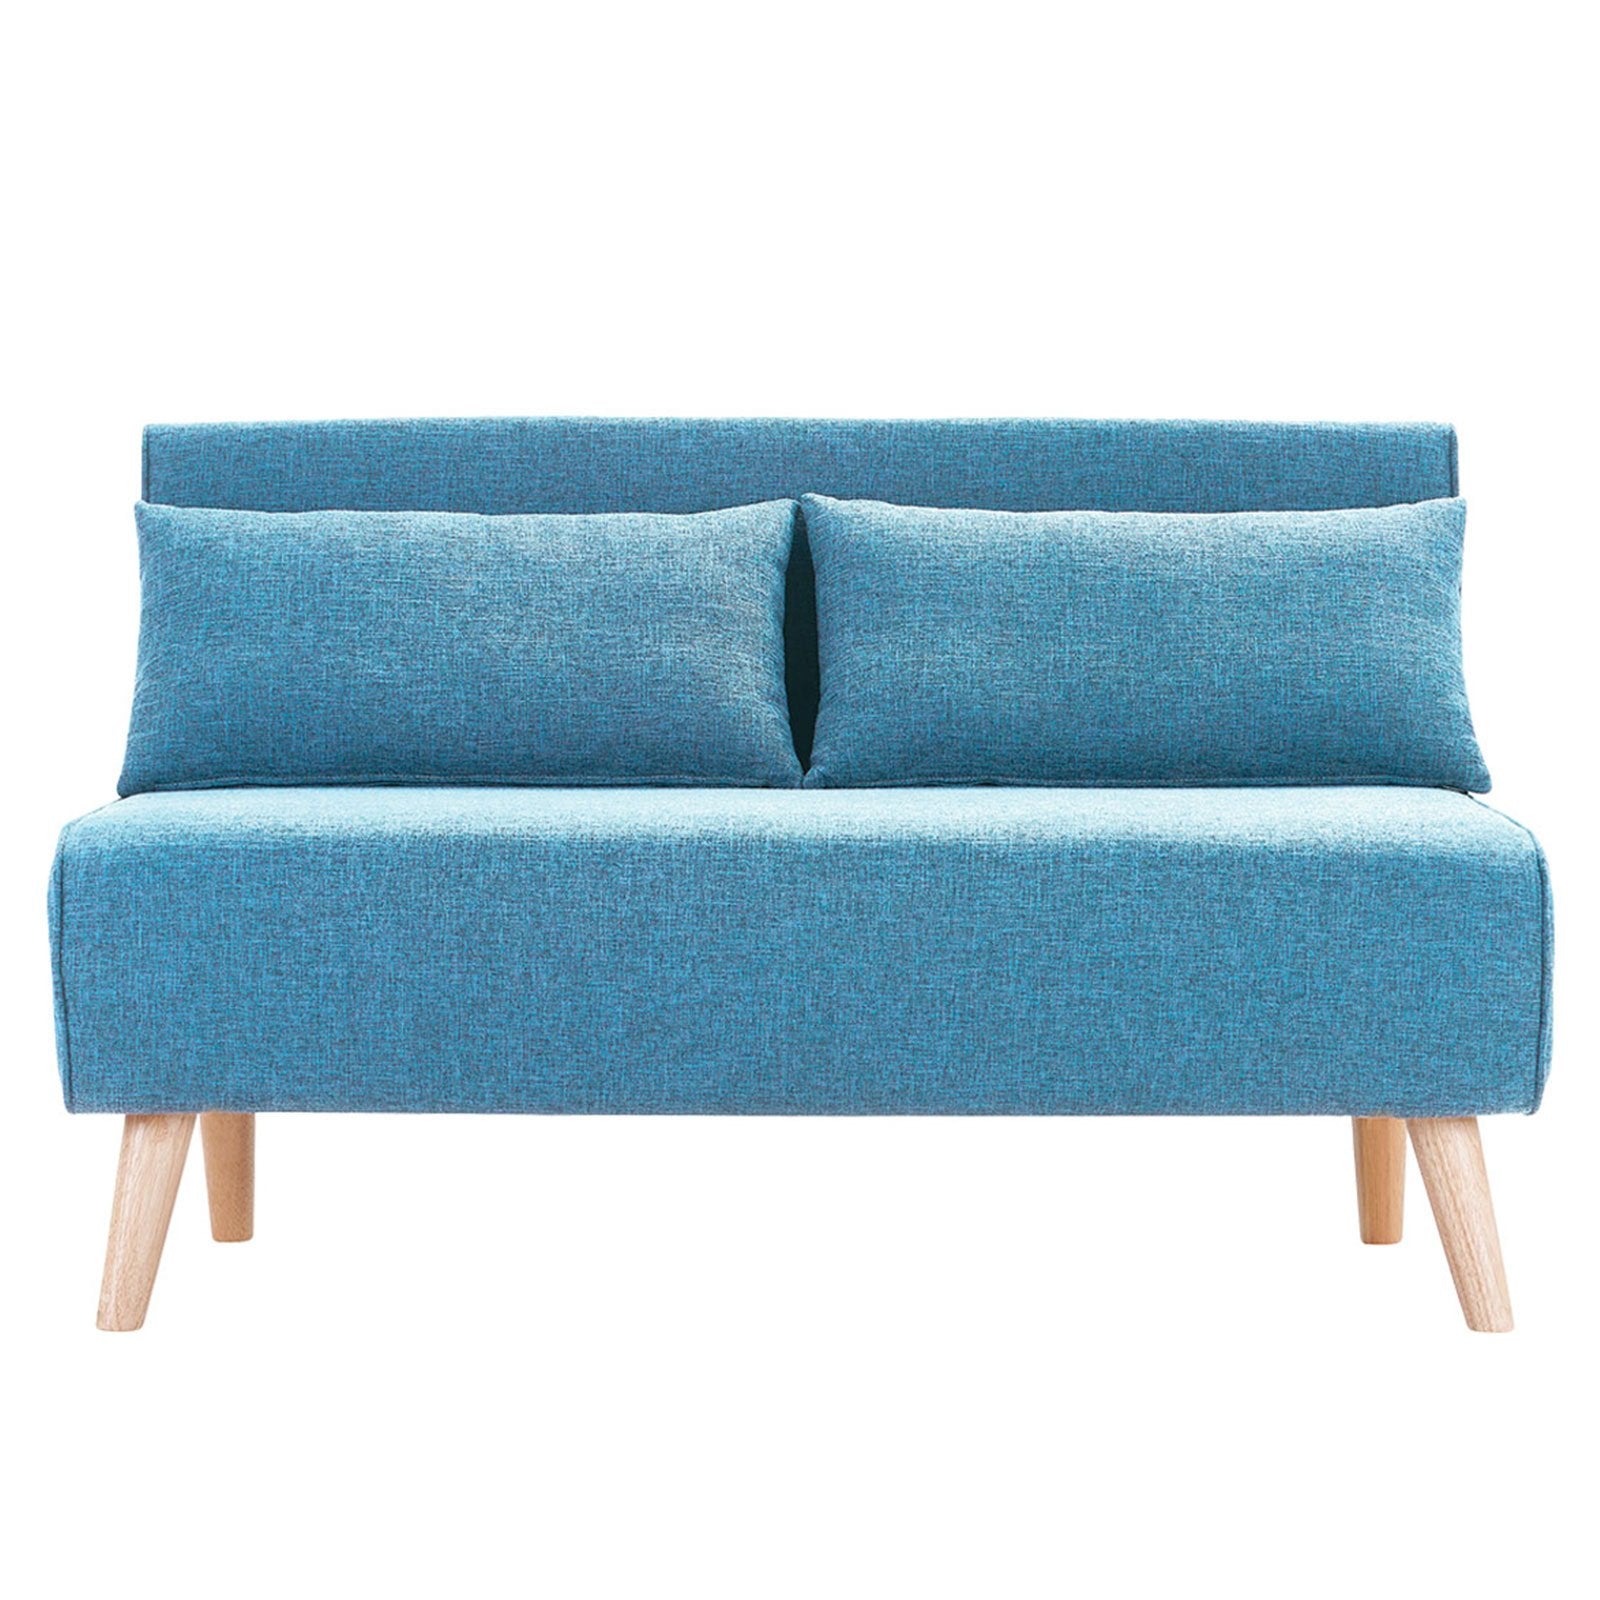 Sarantino Adjustable 2-Seater Linen Sofa Bed - Blue | Space-Saving Design